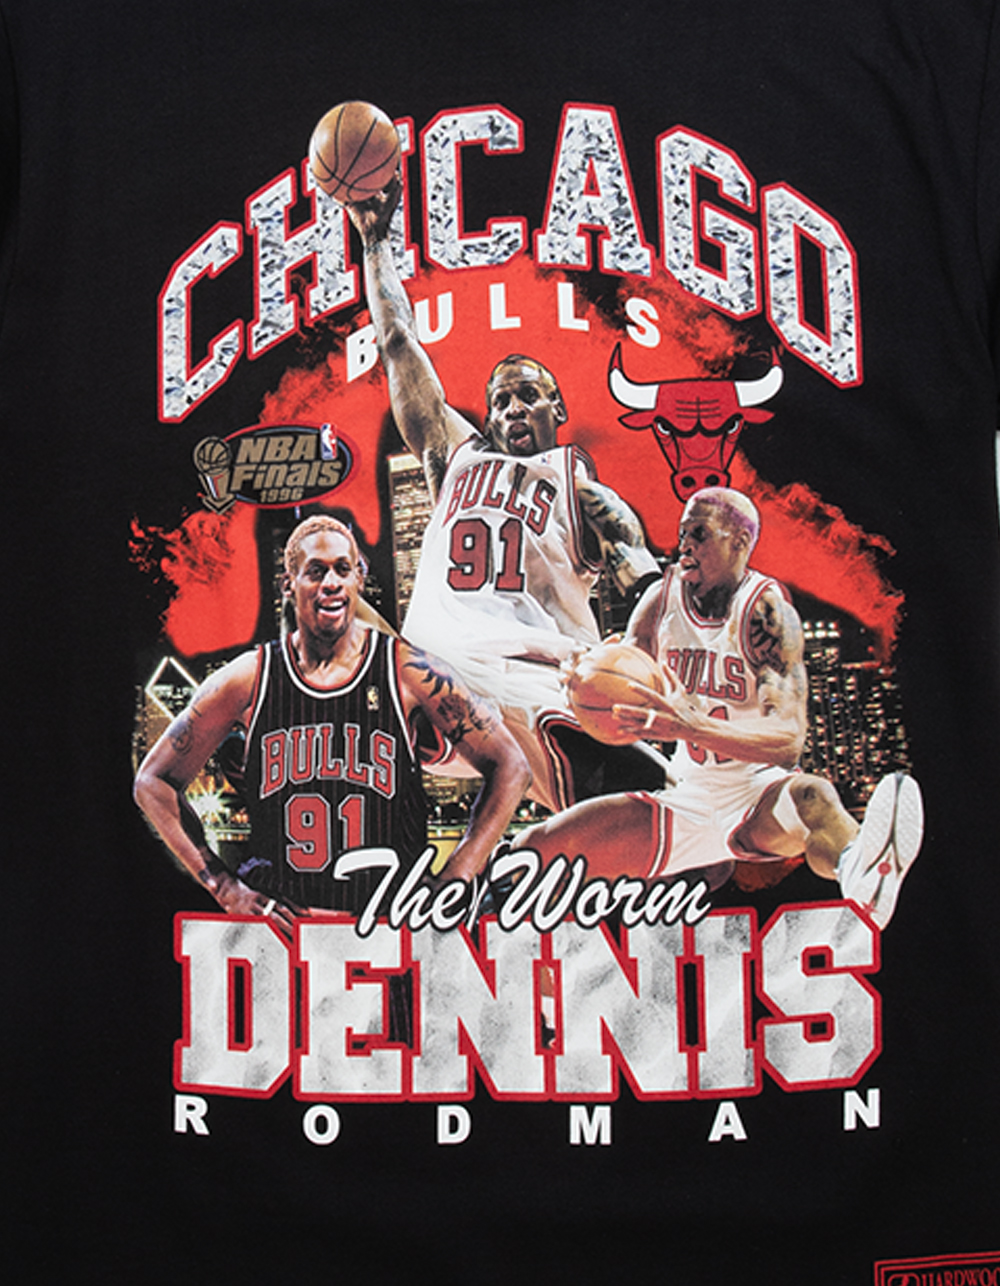 Dennis Rodman Shirt Vintage Converse All Star 1991 Tee USA 